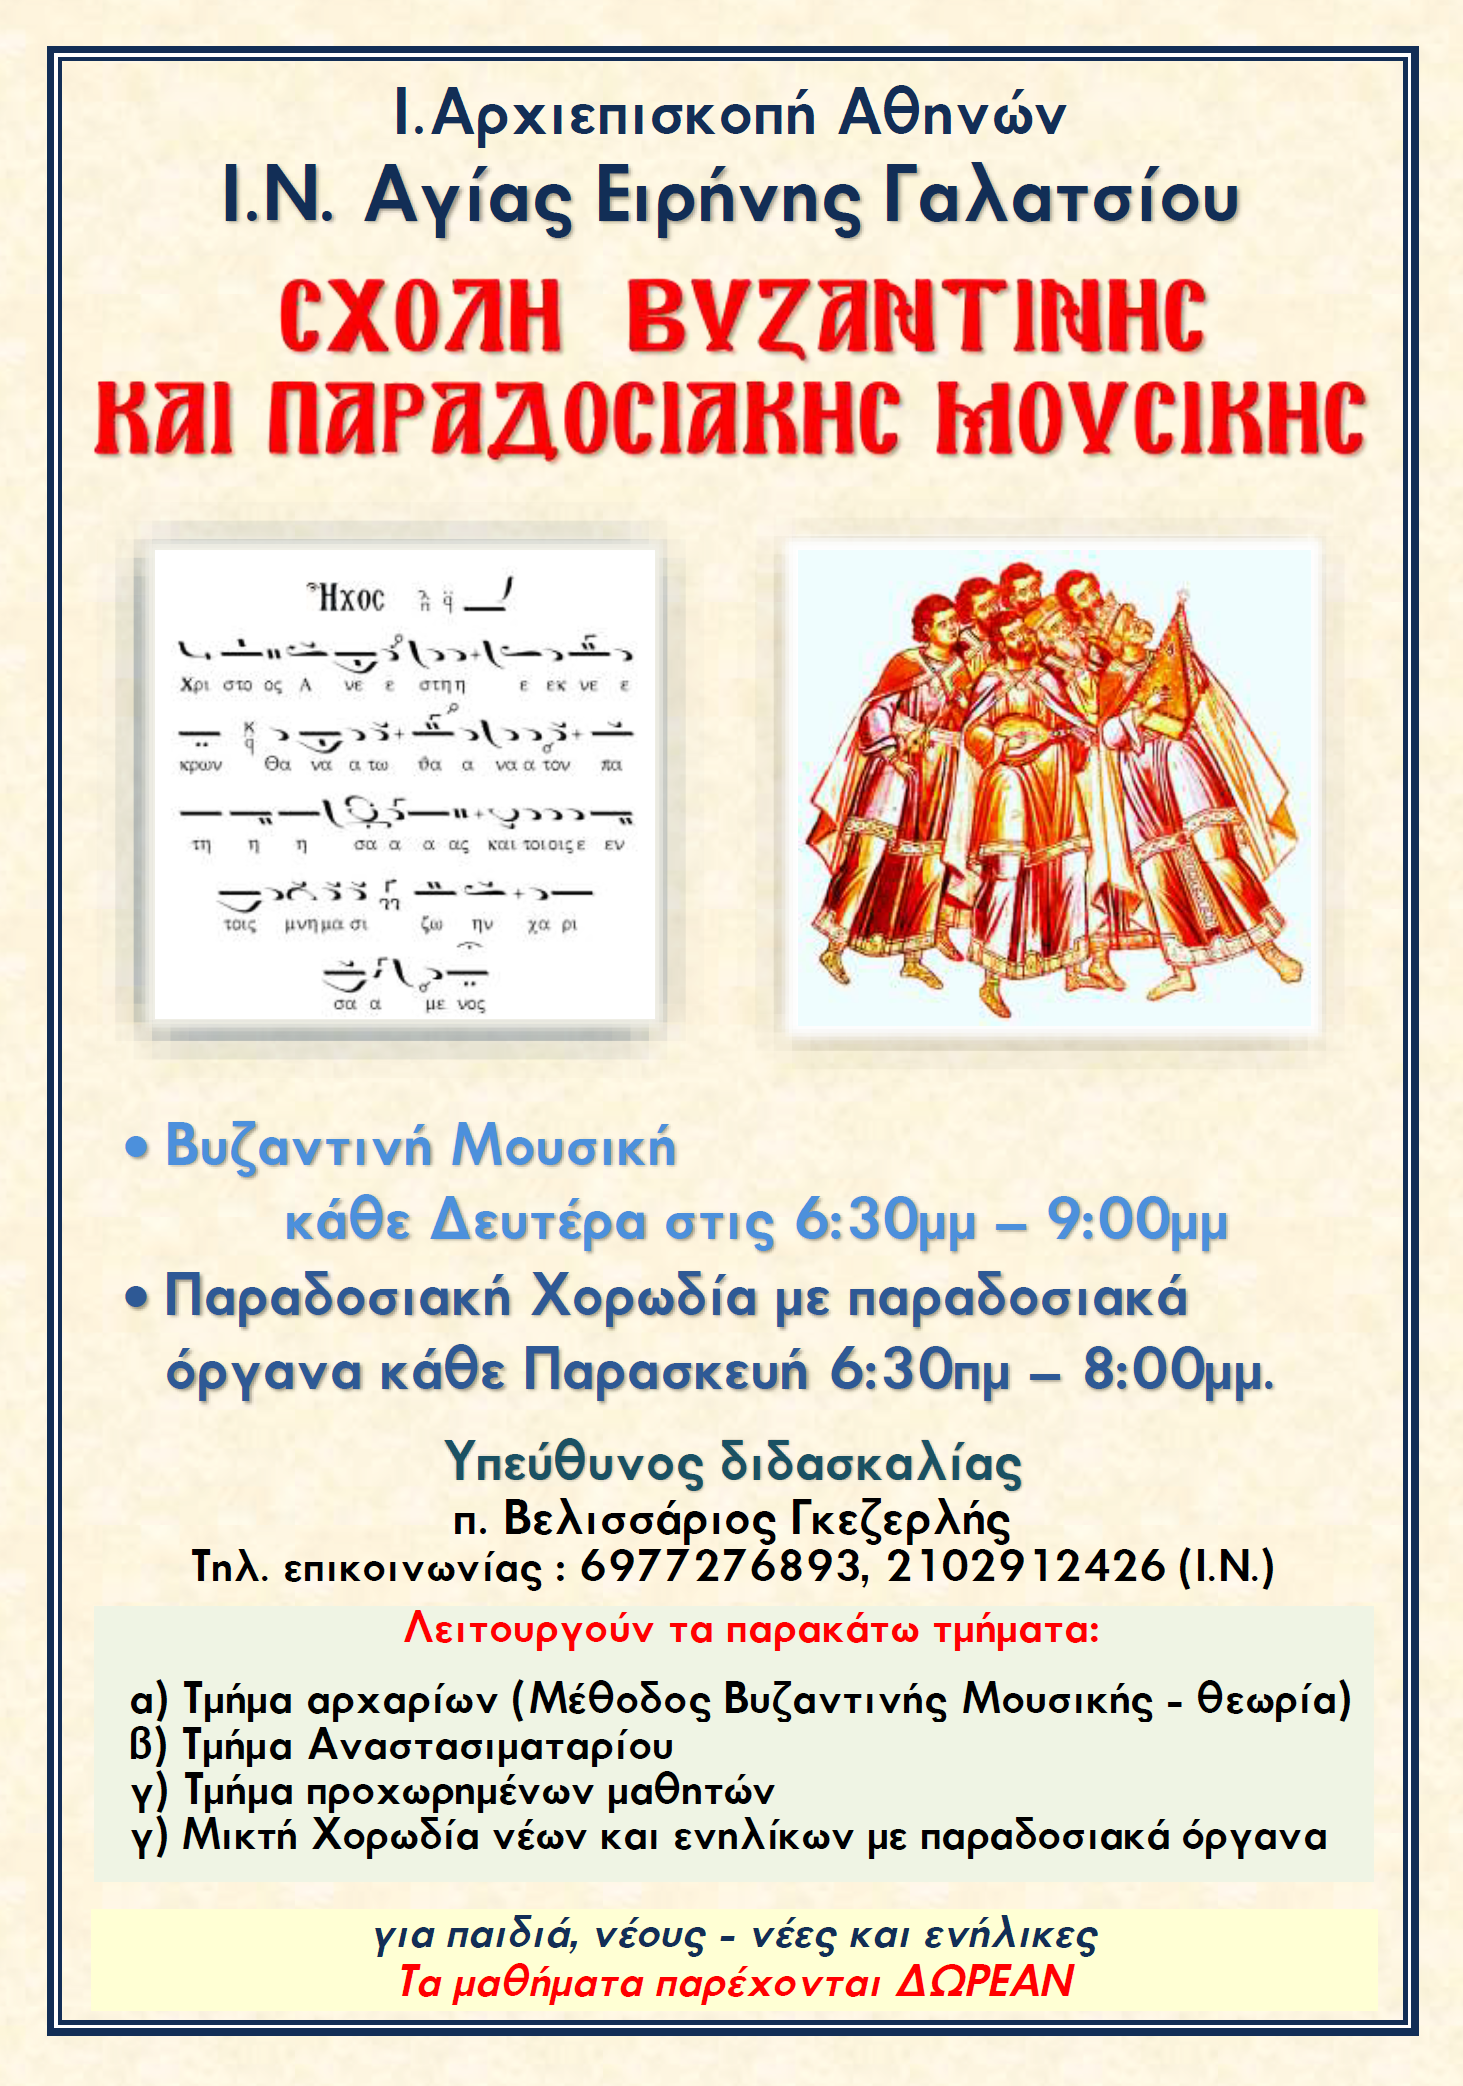 Byzantini mousiki